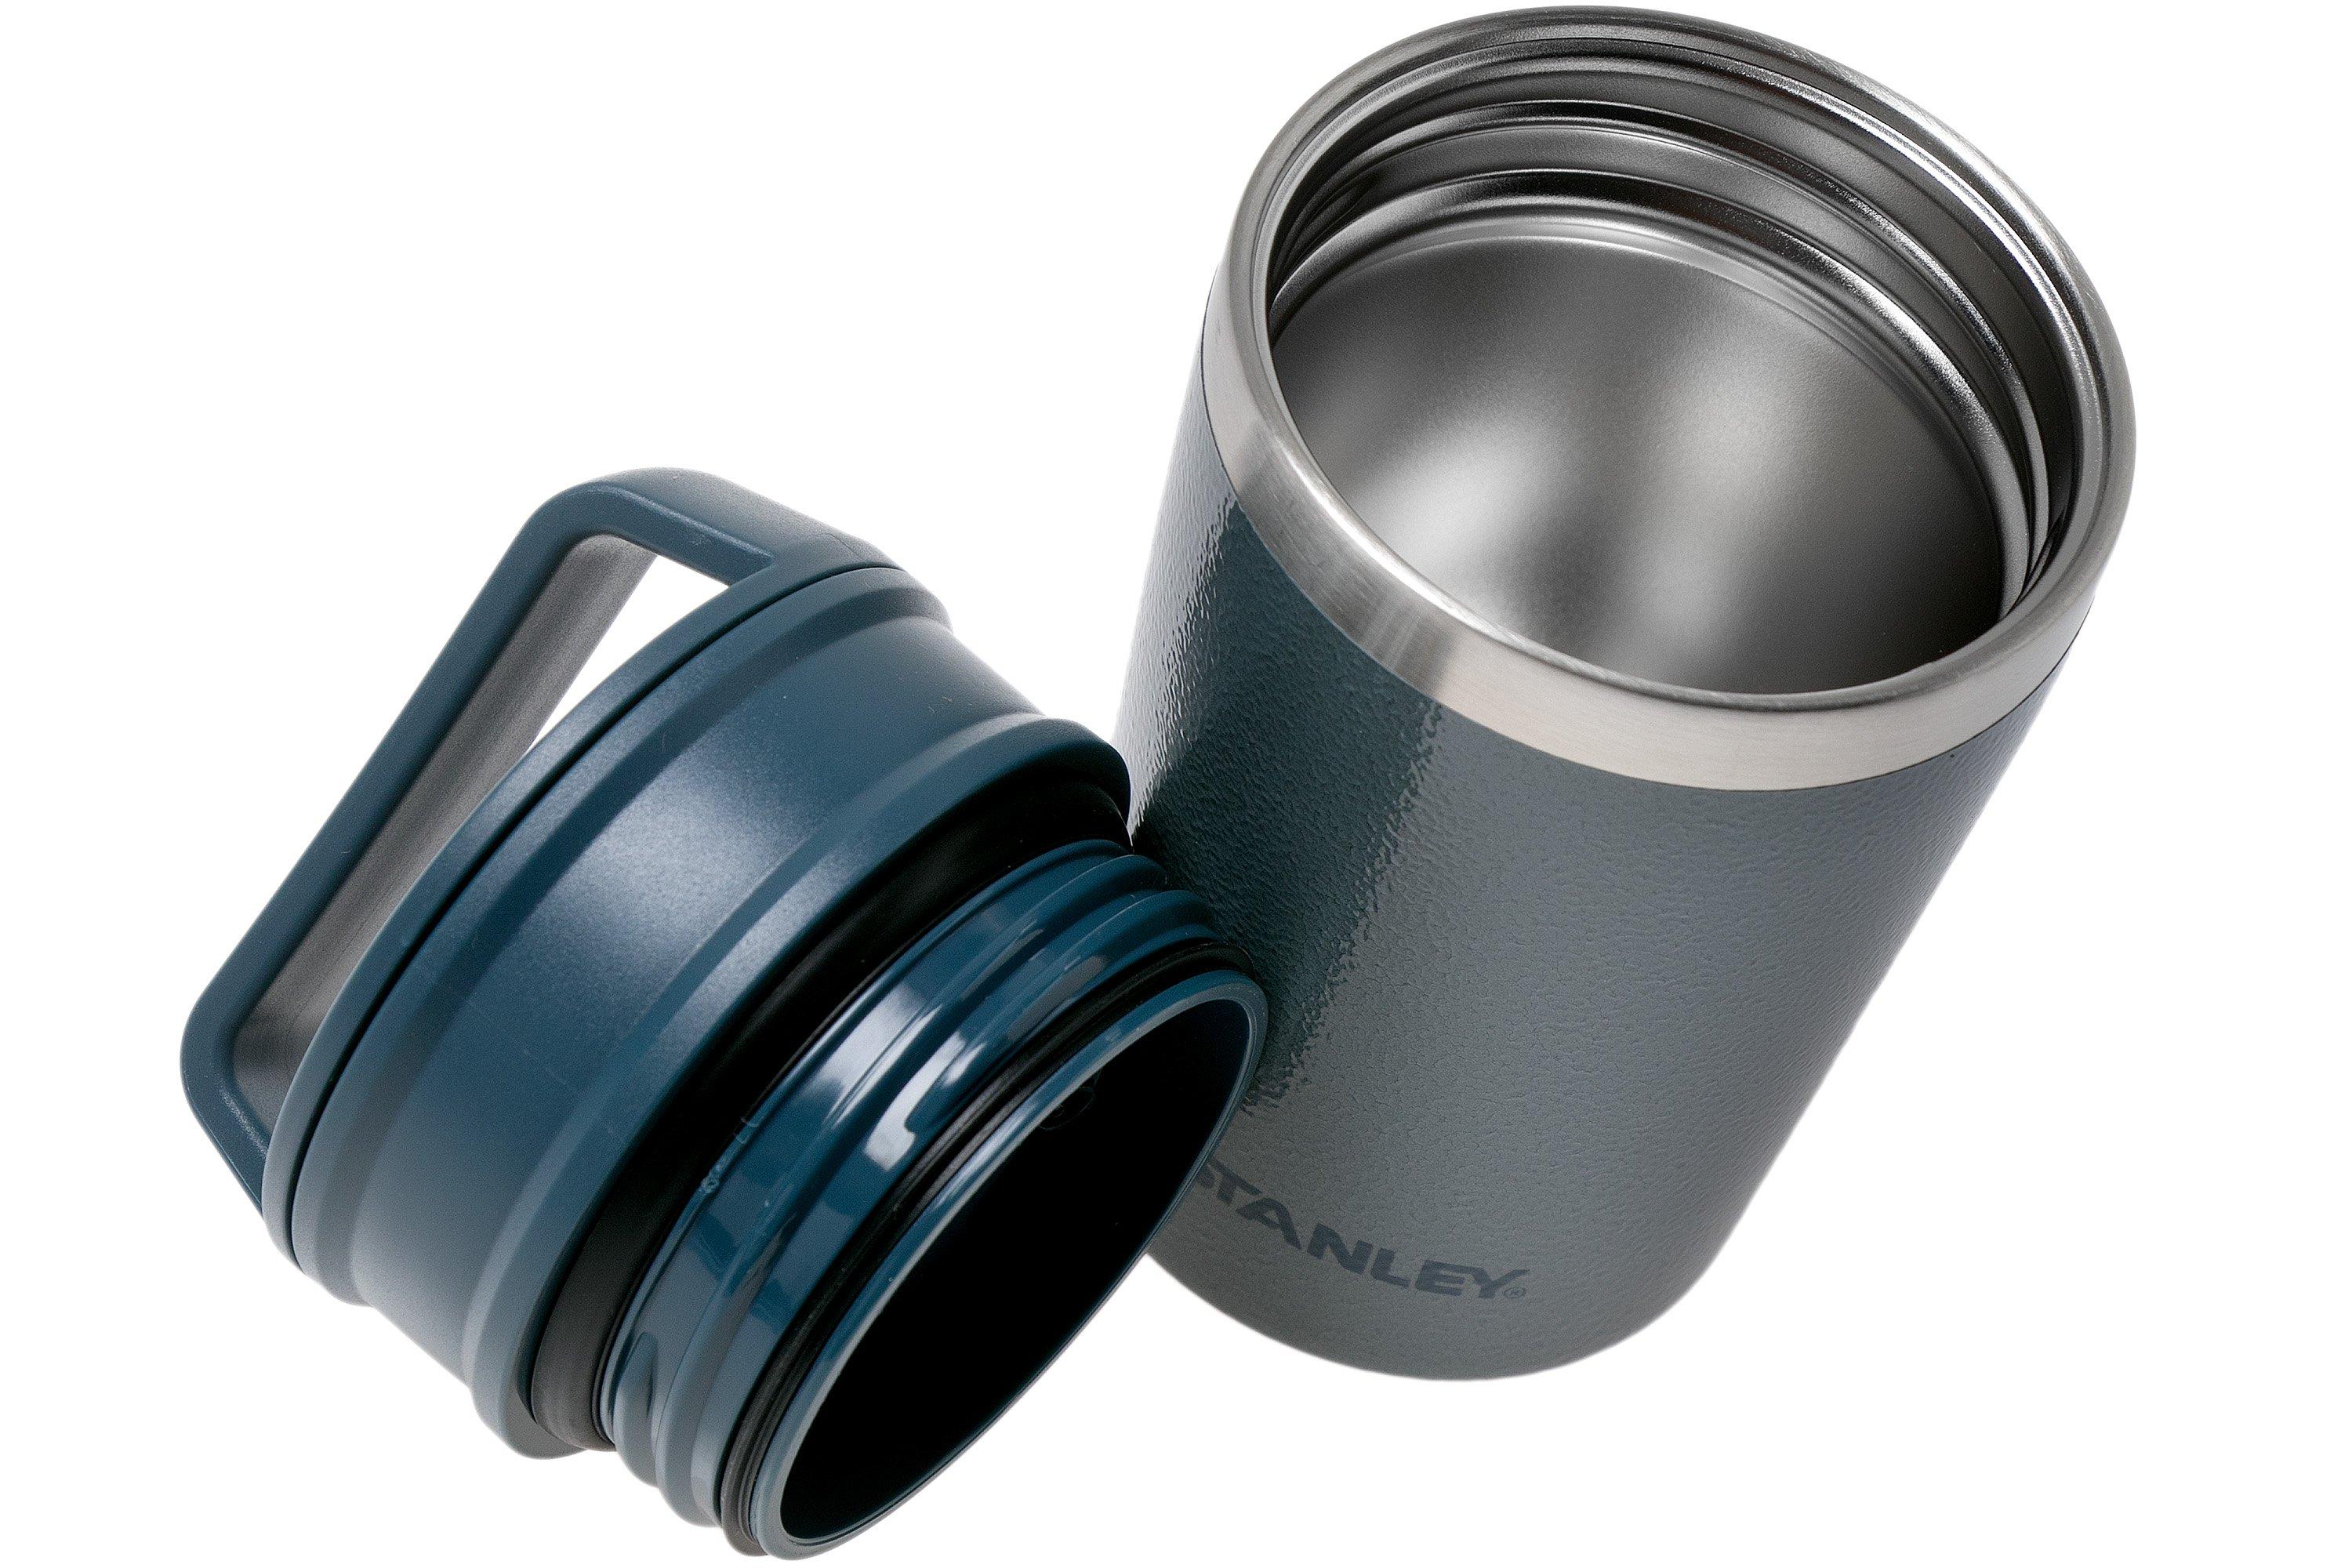 stanley travel mug replacement lid